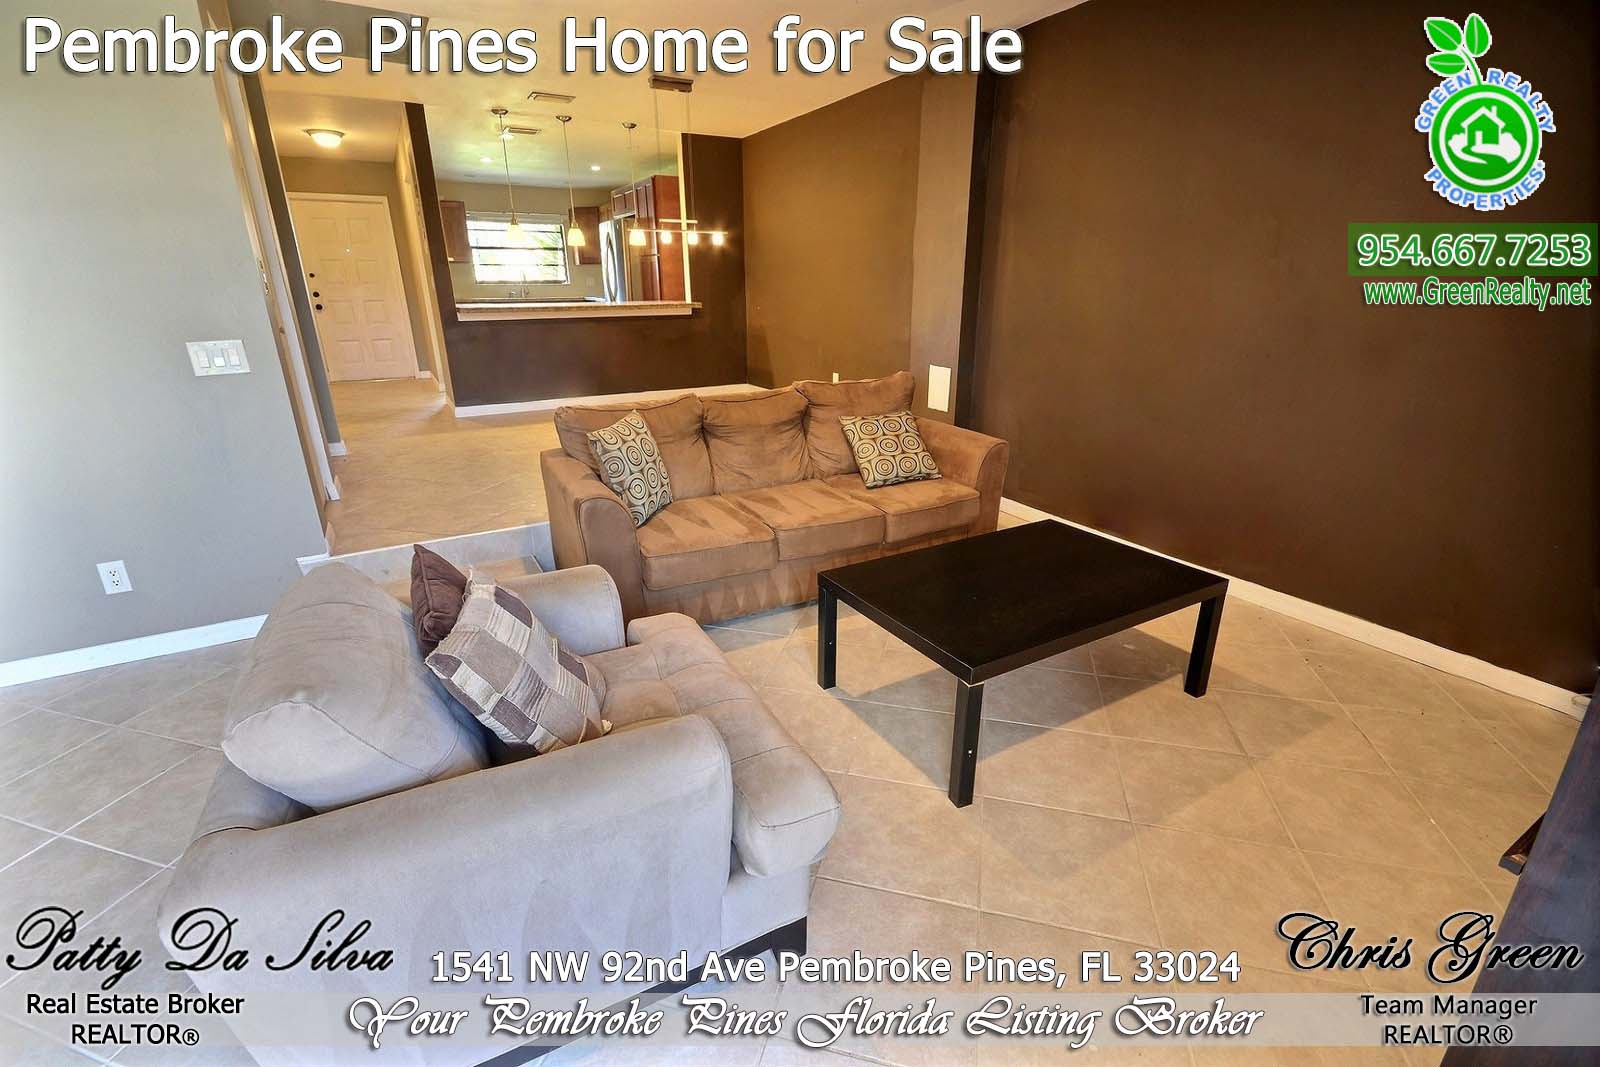 Pembroke Pines Real Estate For Sale